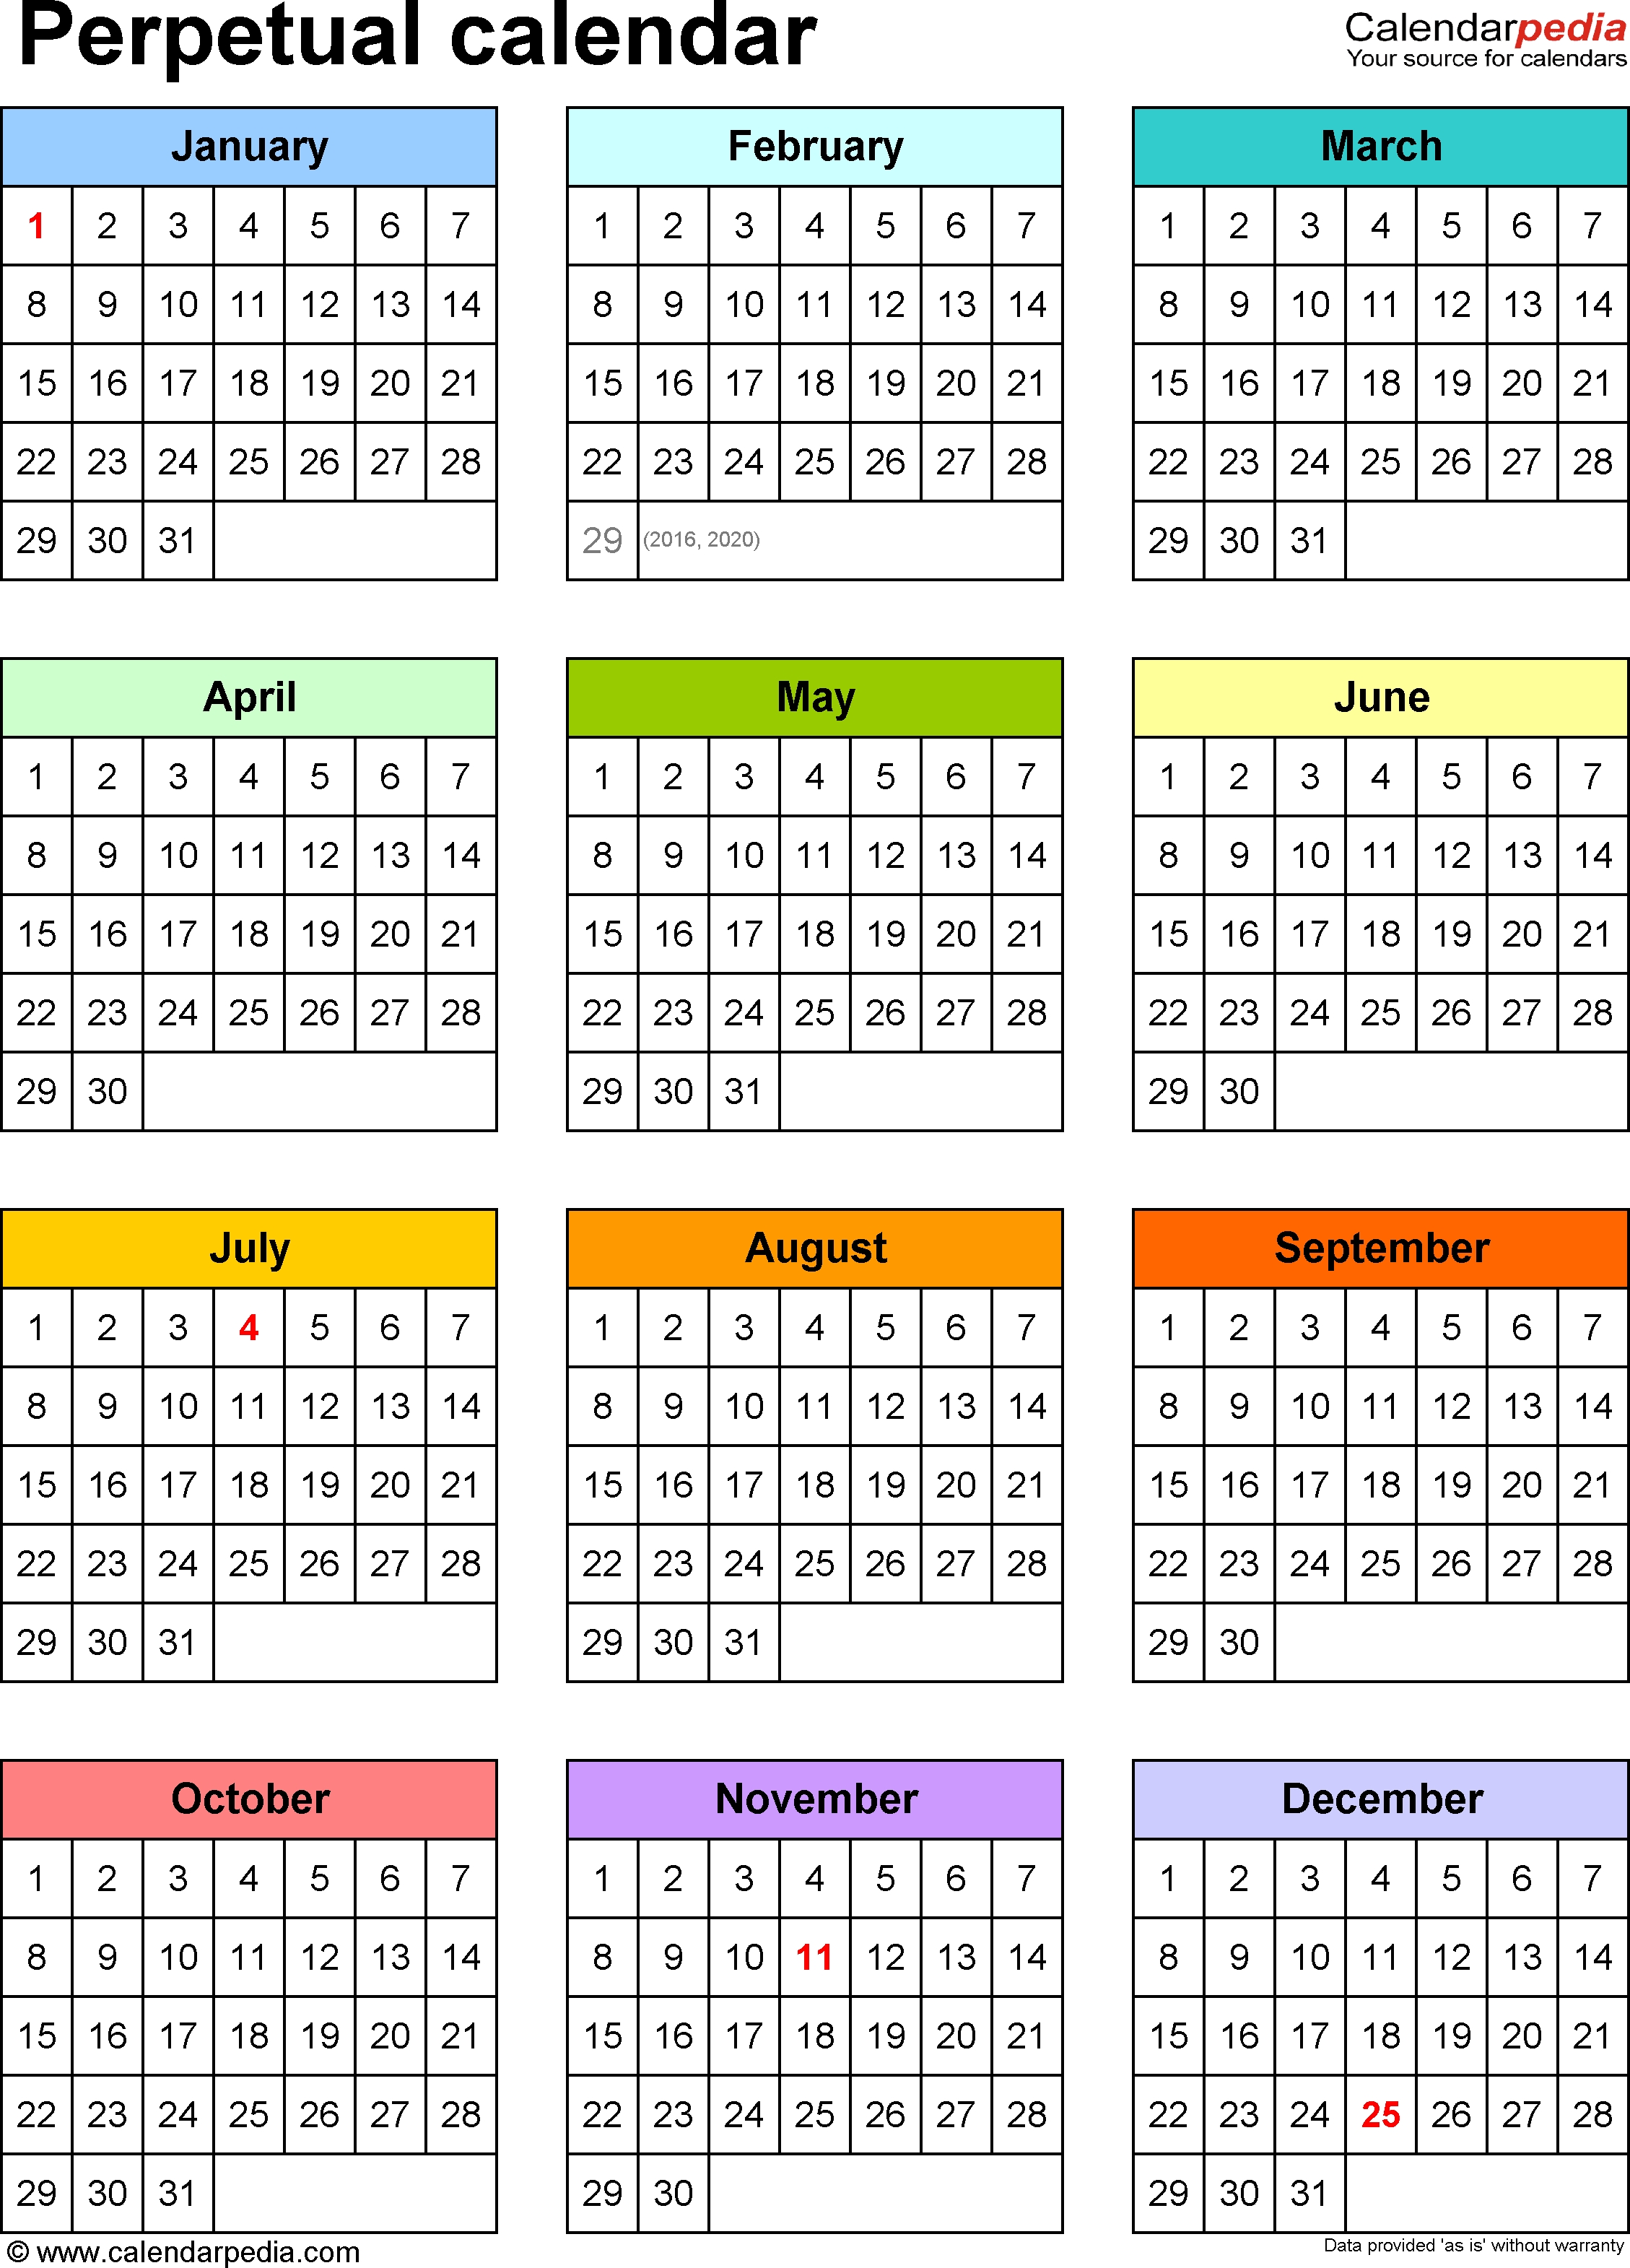 Free Printable Perpetual Calendar Templates